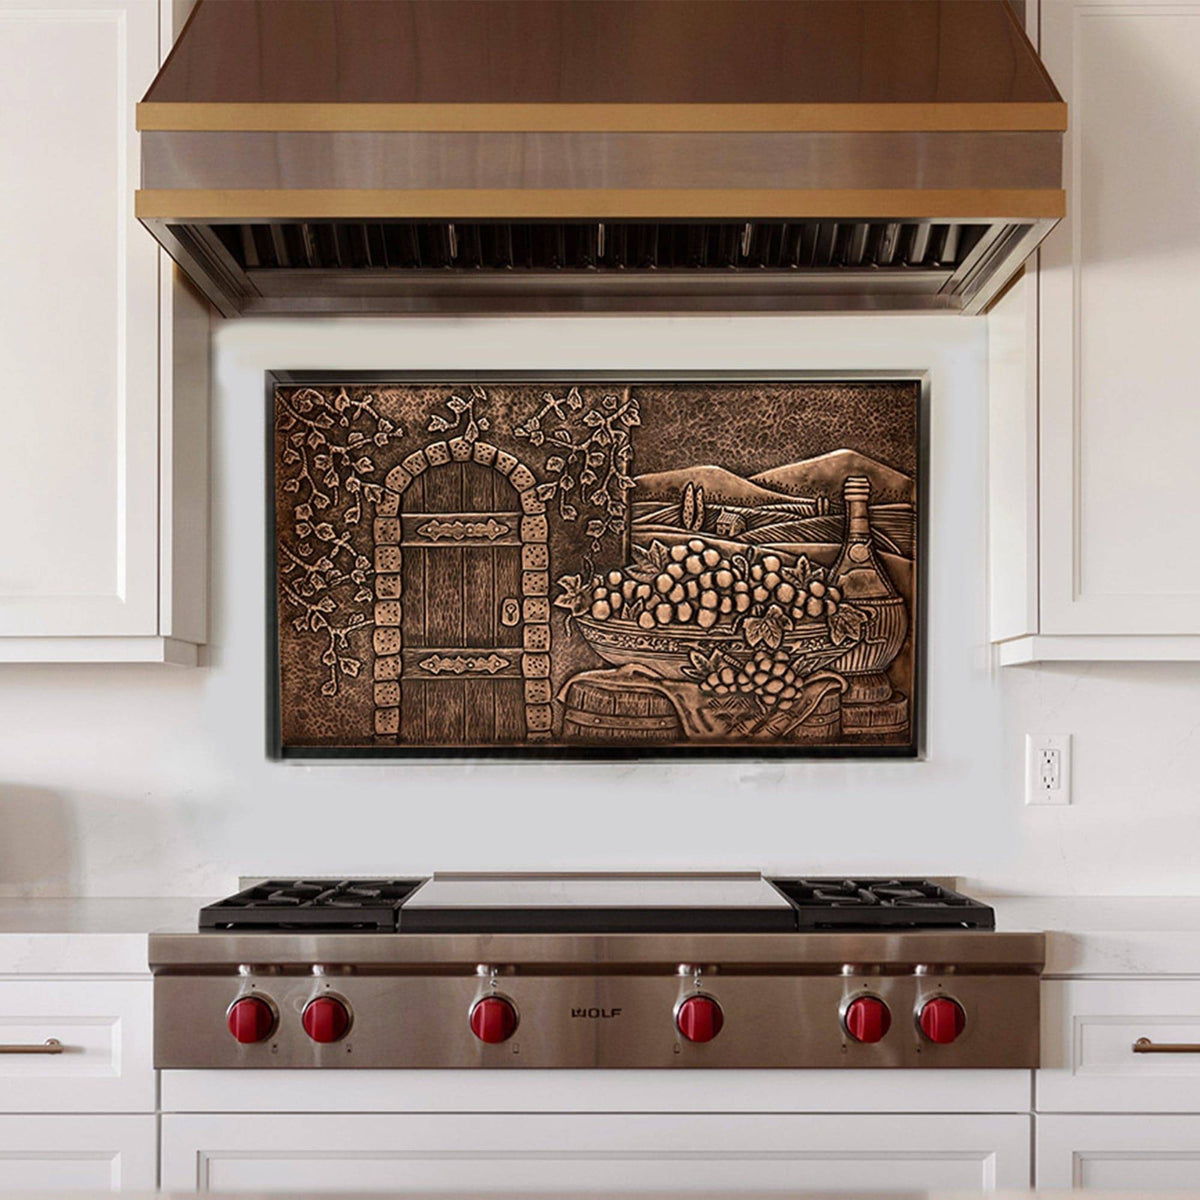 Fobest Handmade Copper Backsplash Kitchen Backsplash Wall Art Vineyard Design -BK6 - -Fobest Appliance